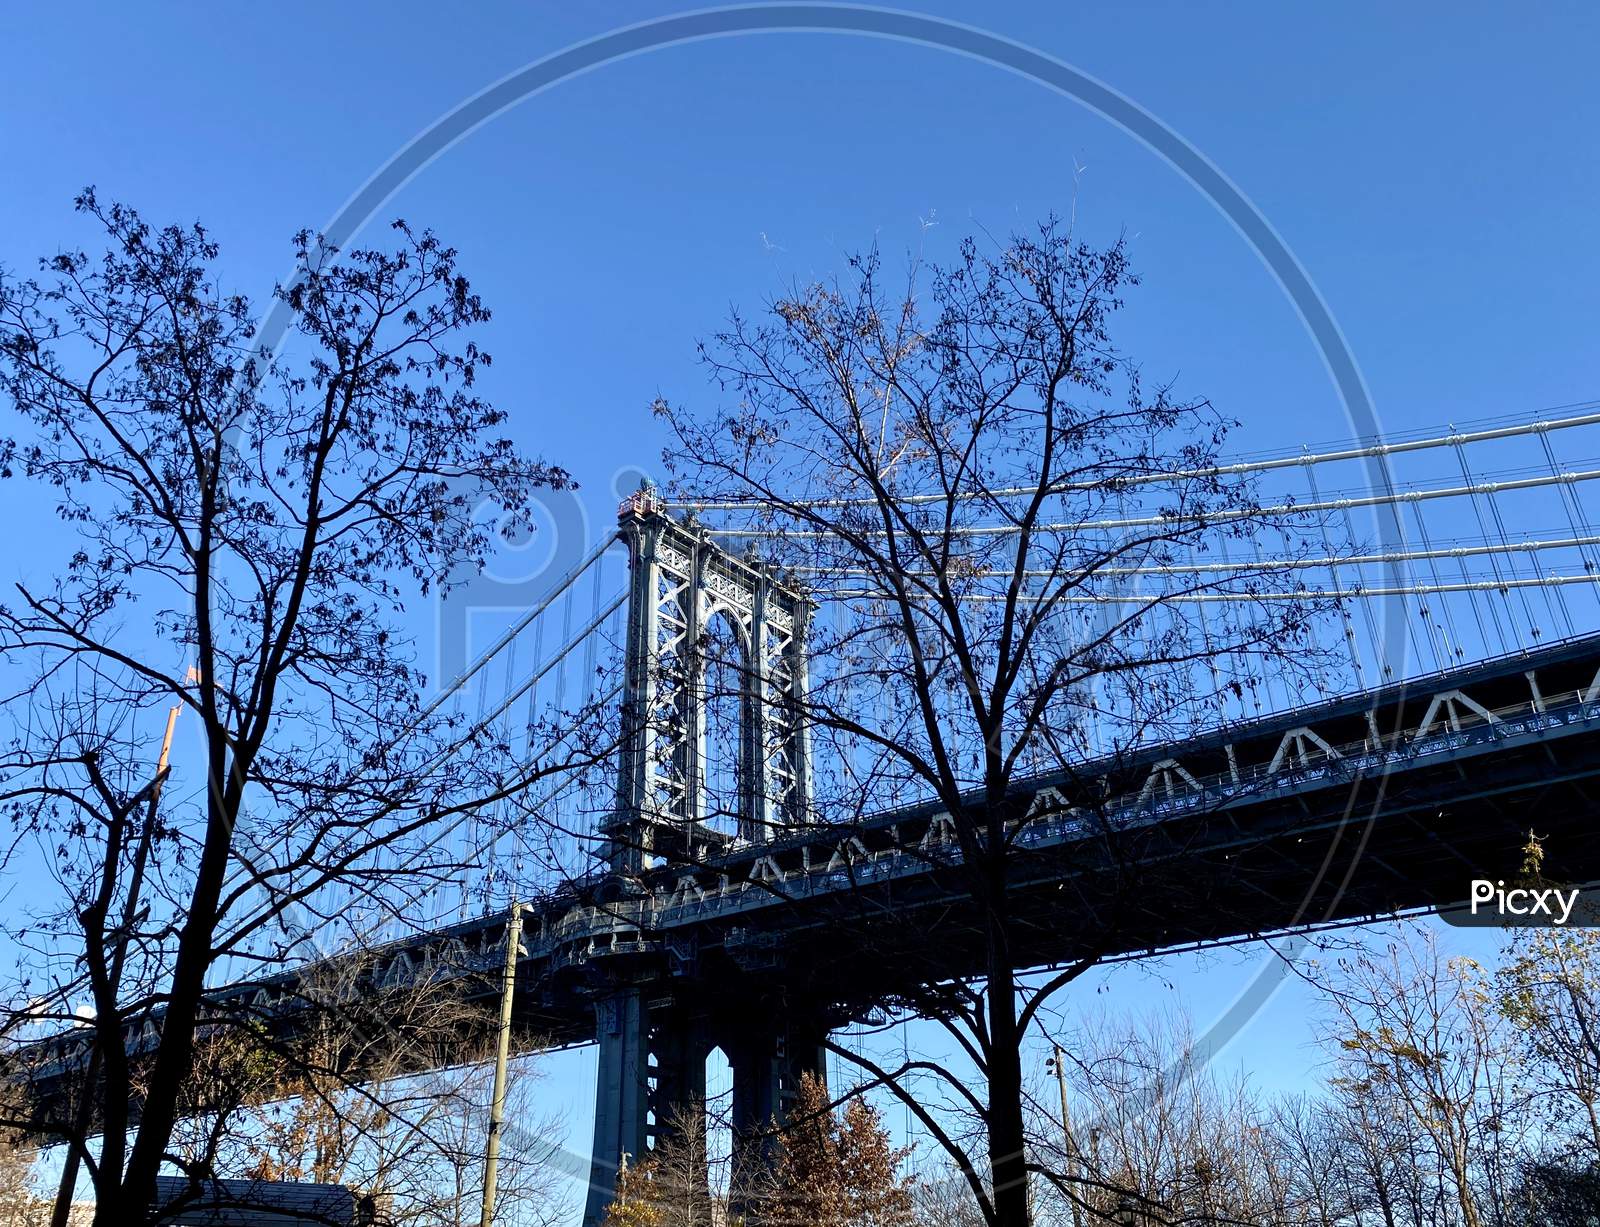 Scenic view around Manhattan, NY, USA downtown, - Bridges